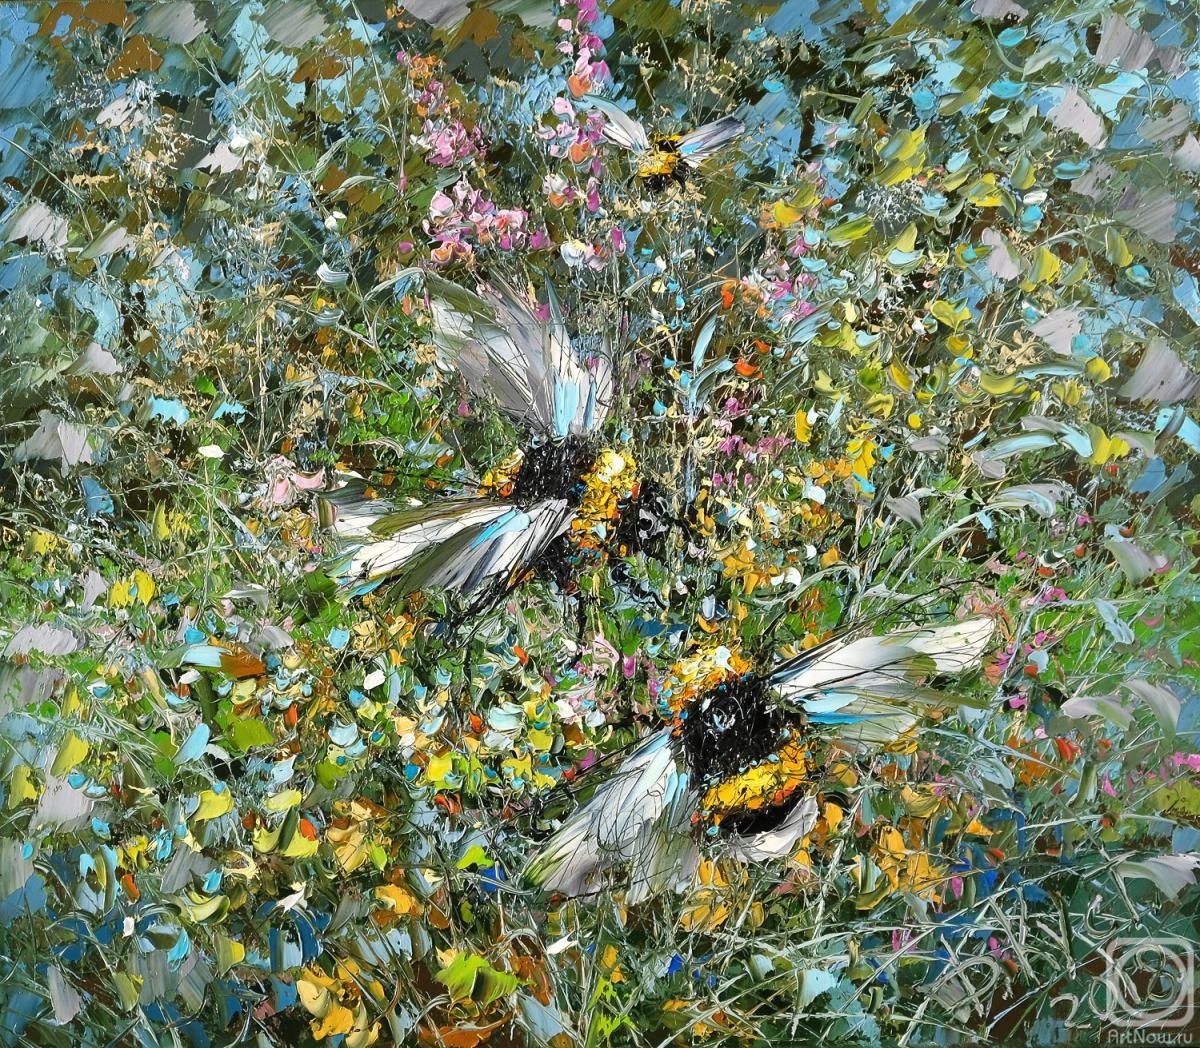 Kustanovich Dmitry. Bumblebees